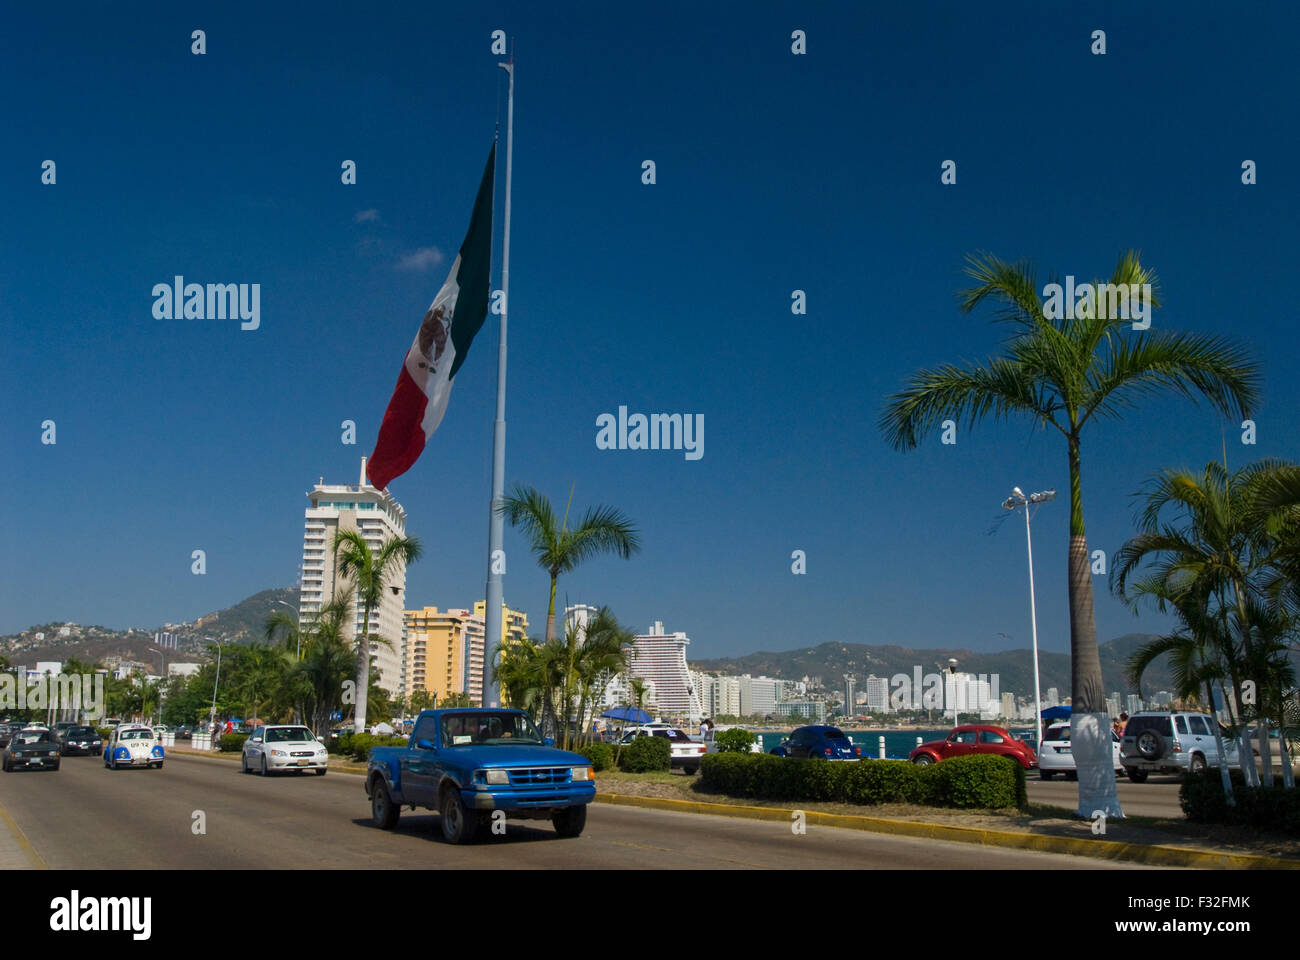 The coastal town of Acapulco, Mexico. The Avenida Costera Miguel Aleman Stock Photo